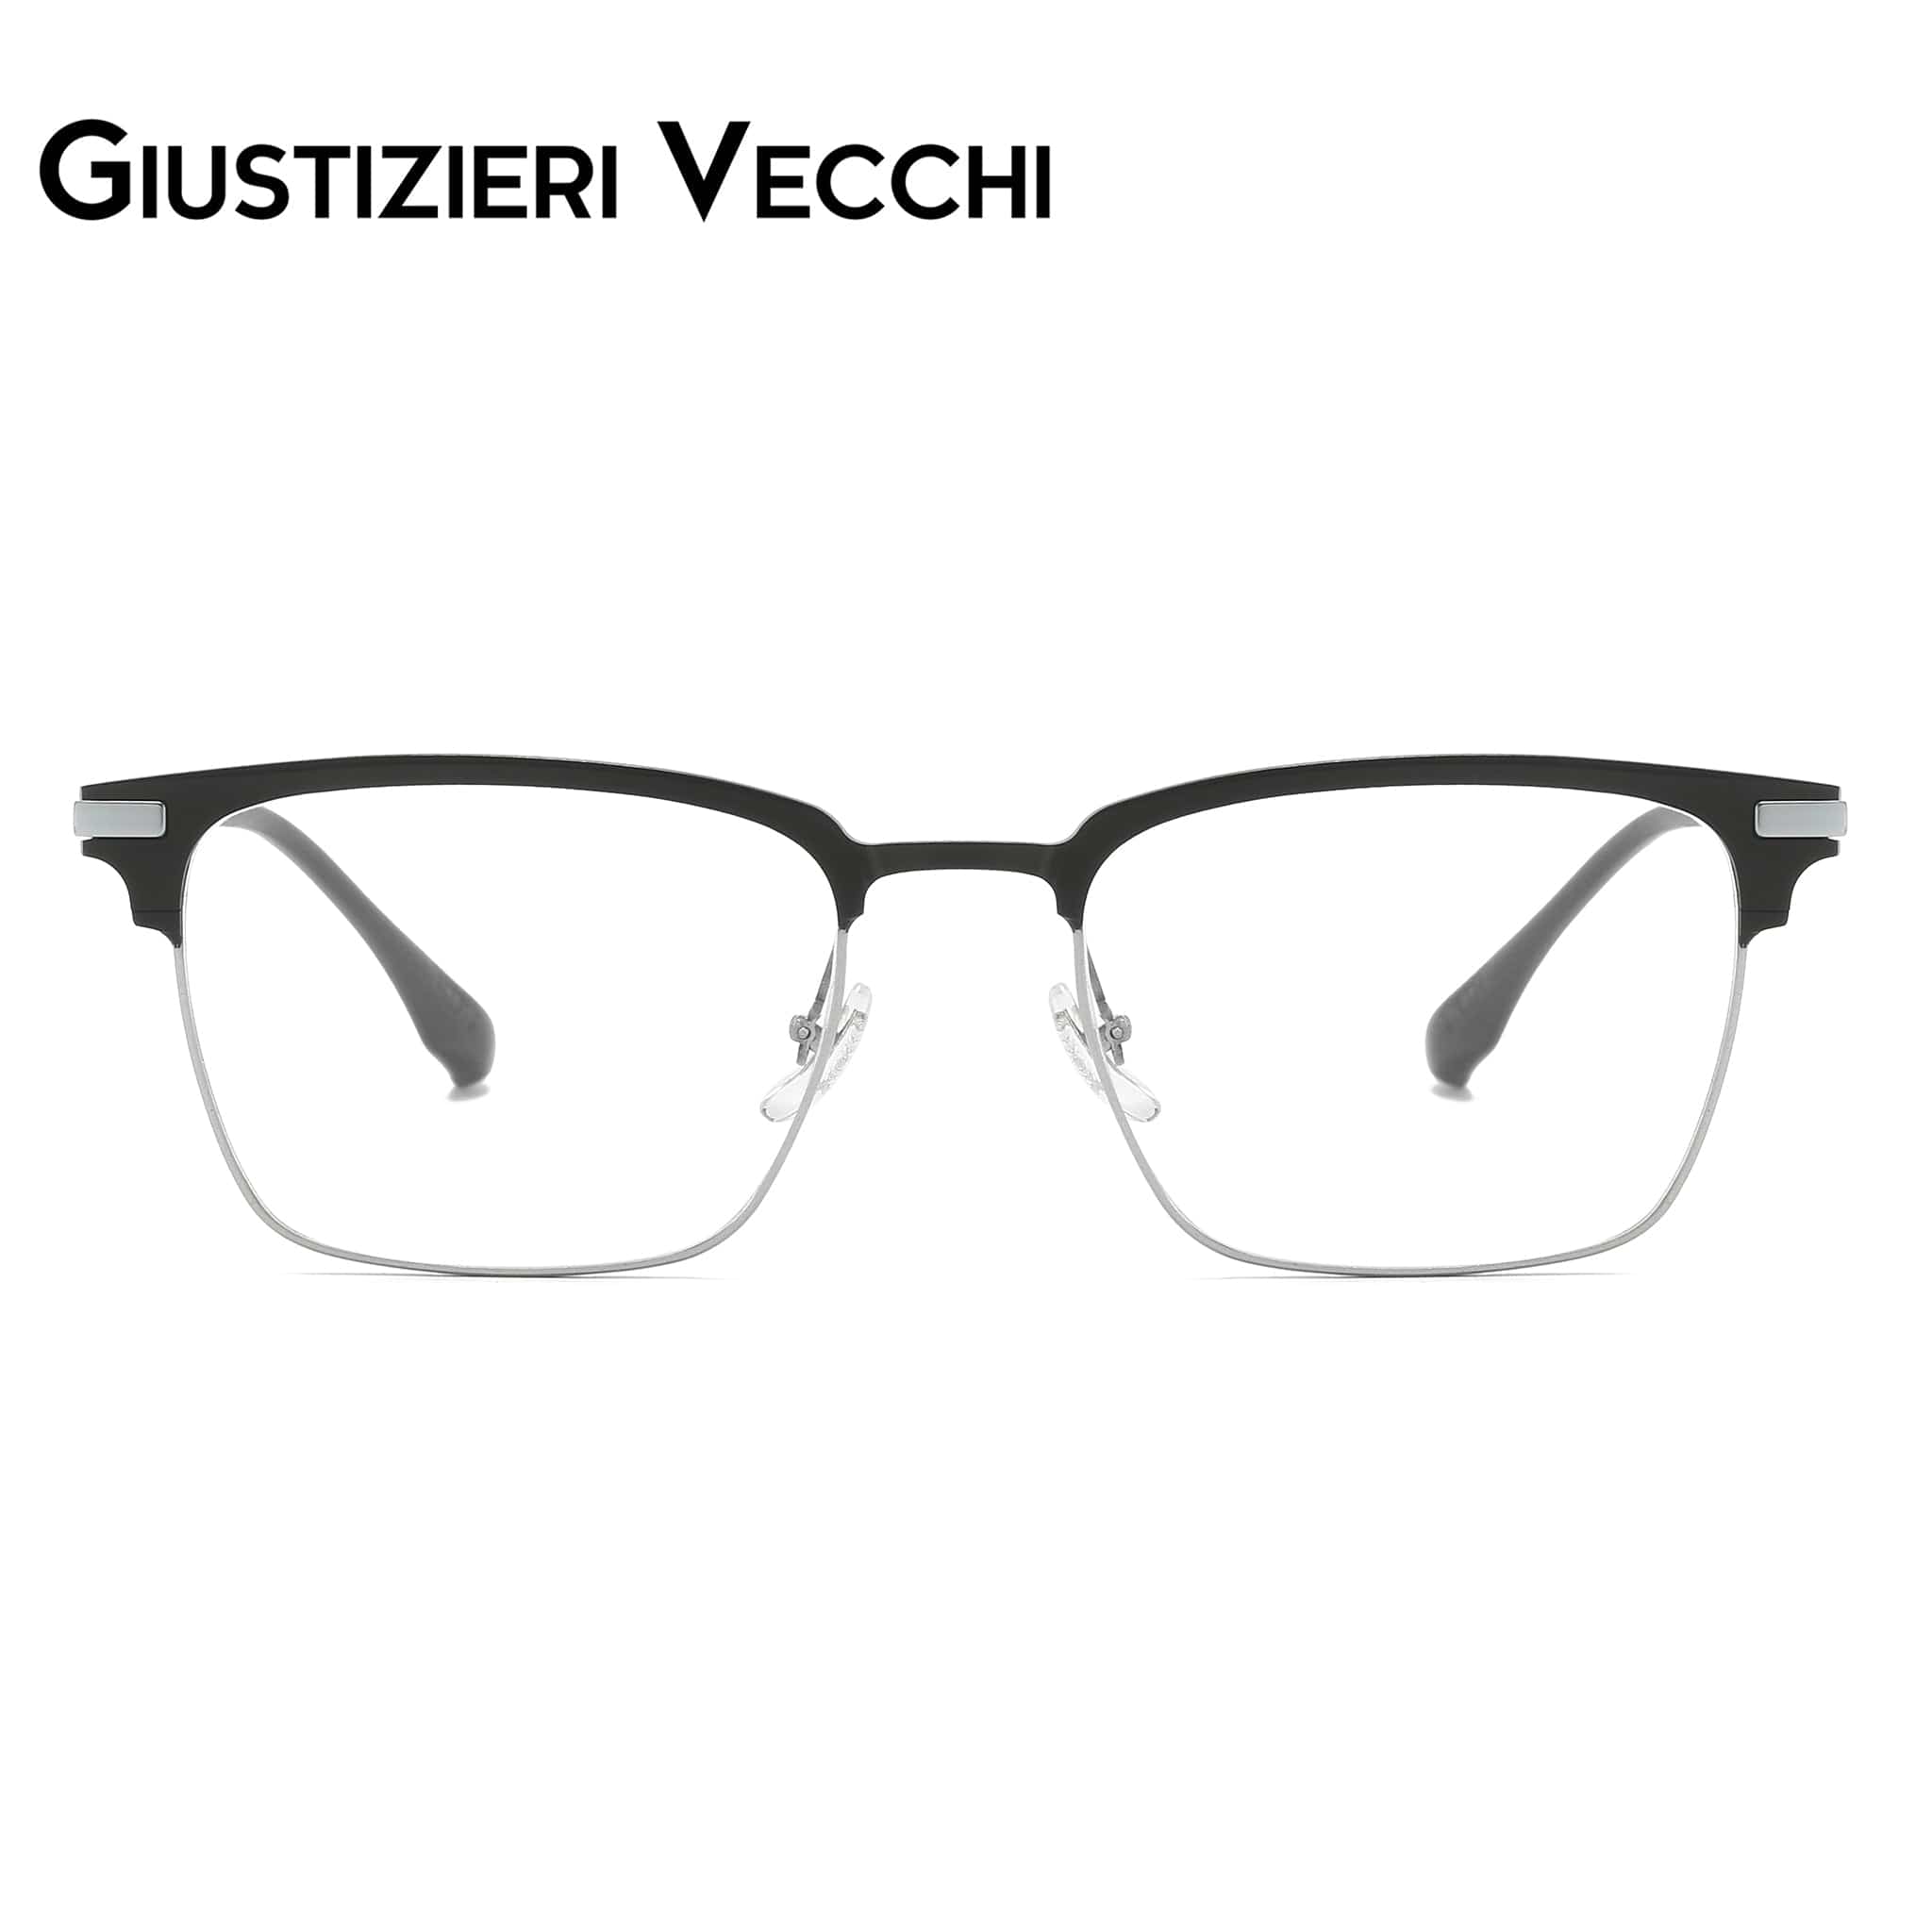 GIUSTIZIERI VECCHI Eyeglasses Medium / Black with Silver Wildflower Duo